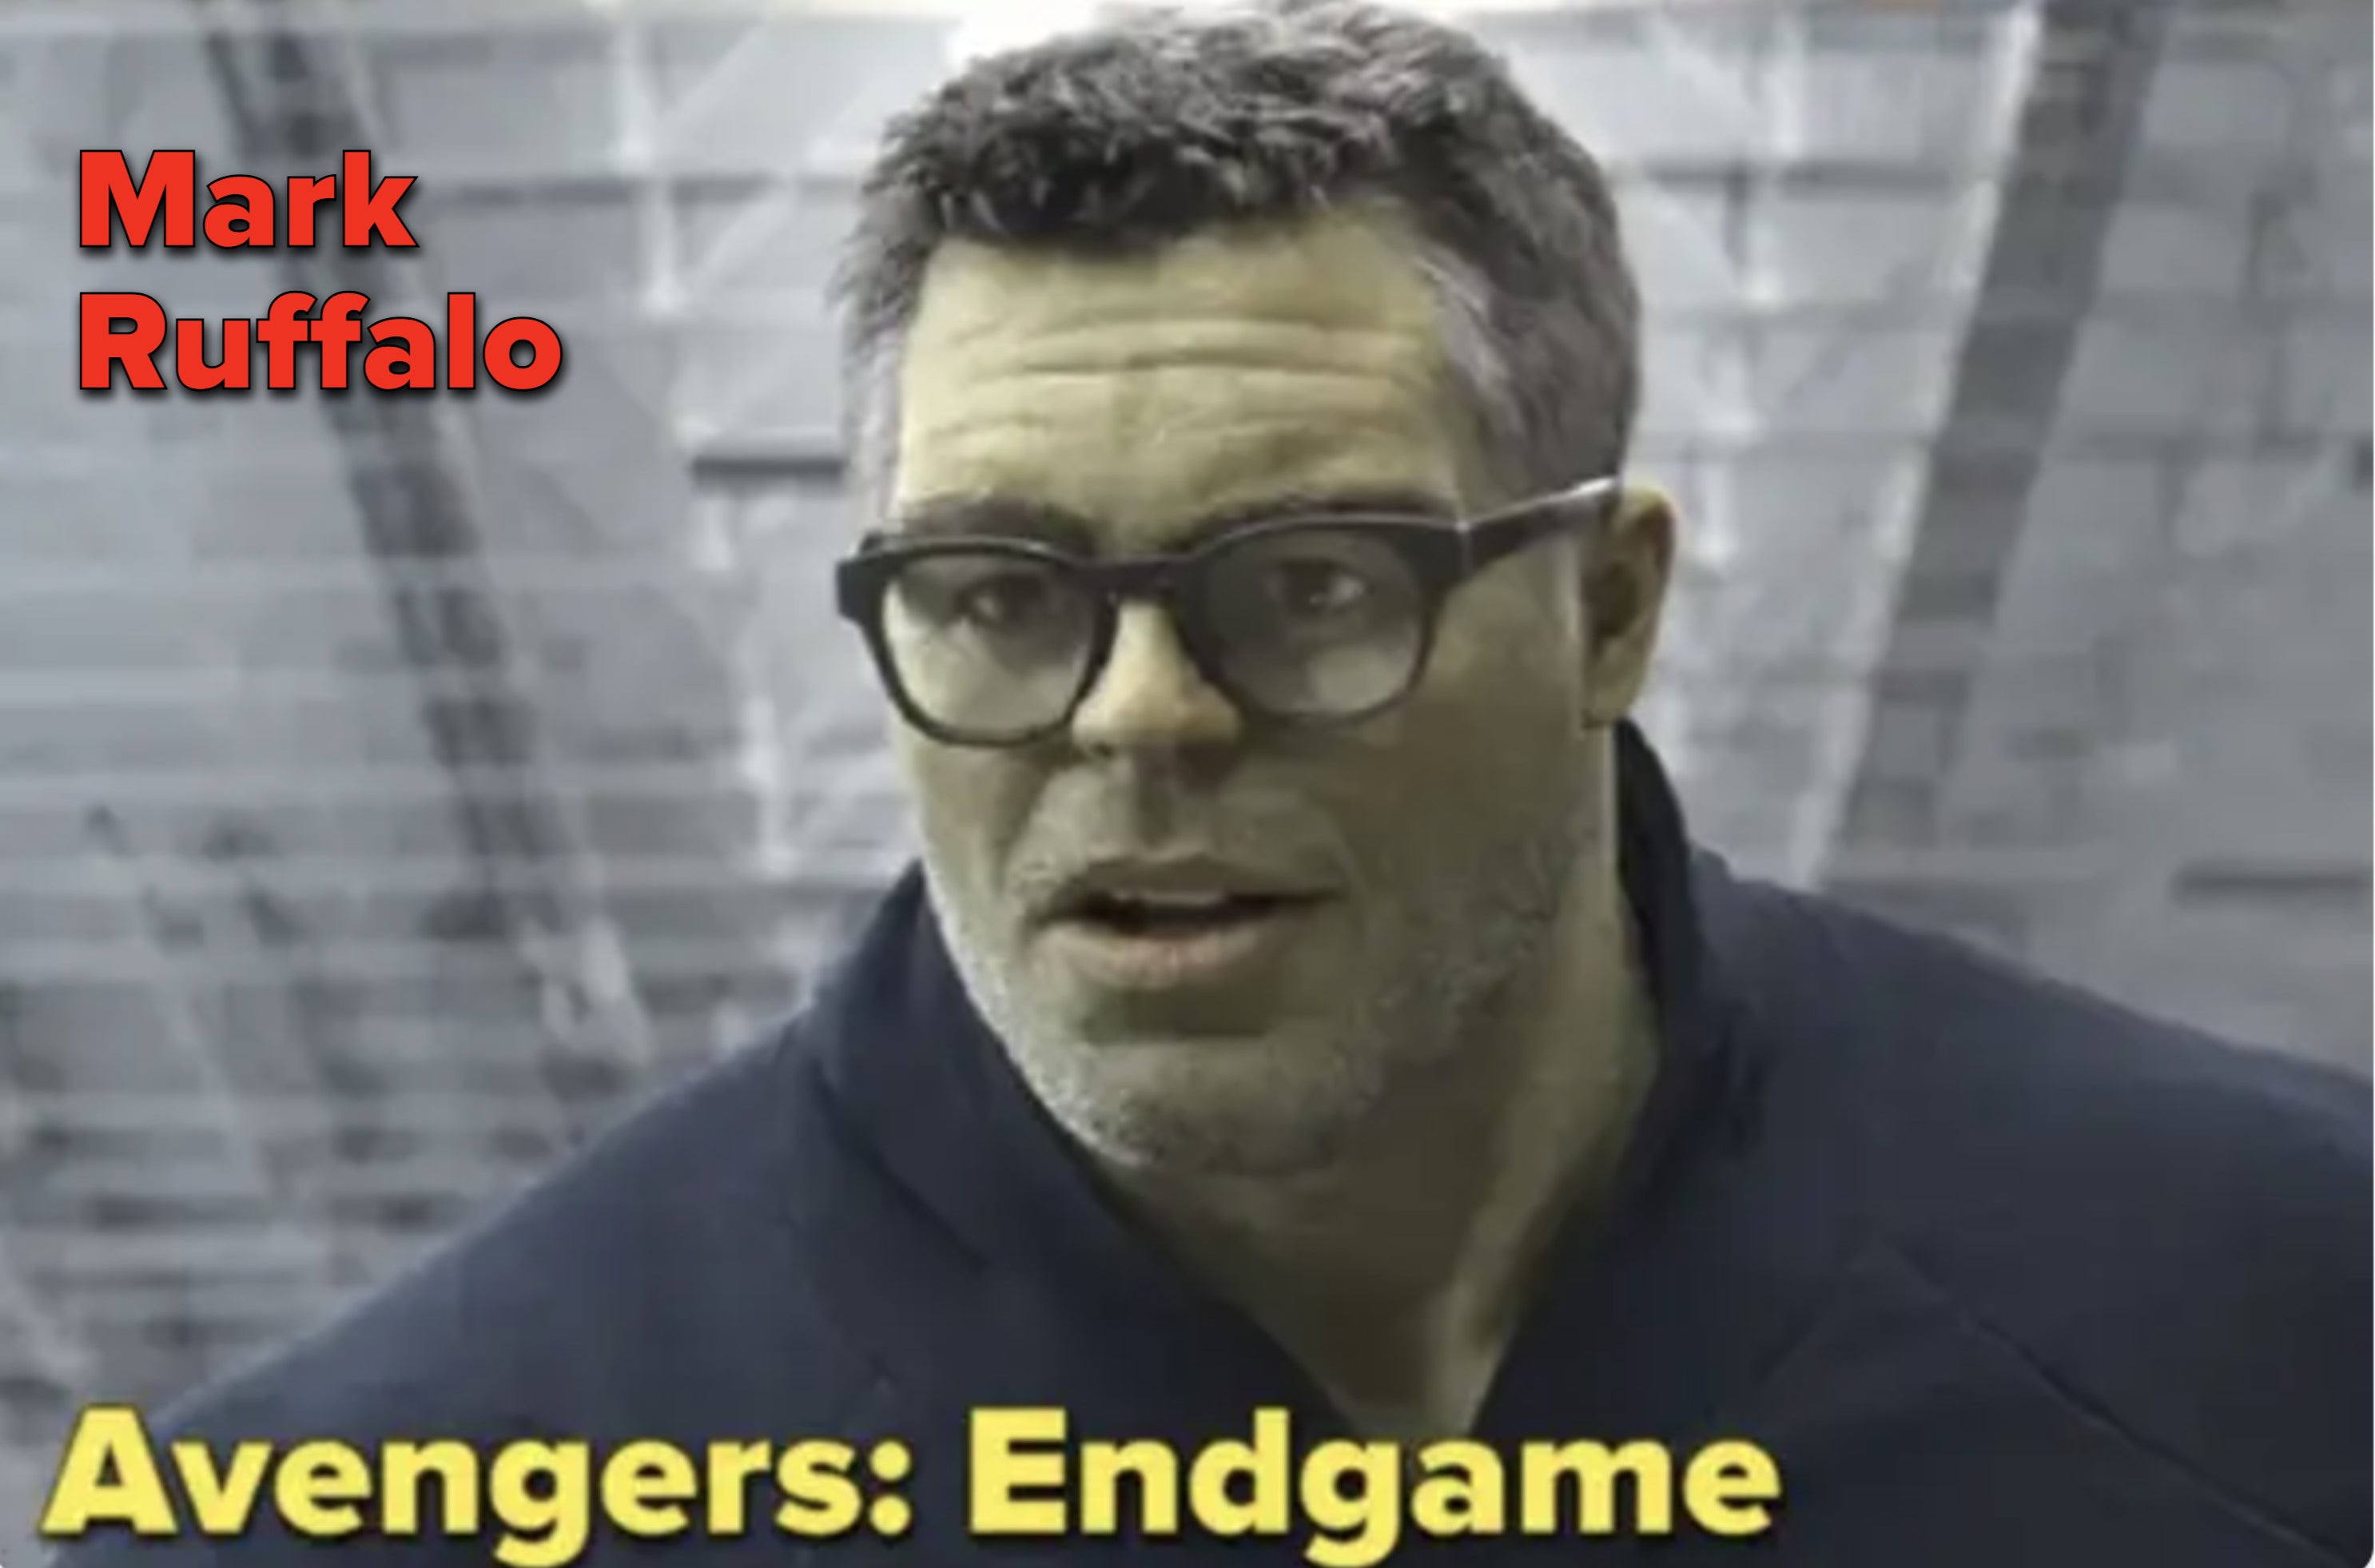 Mark Ruffalo as the Hulk in Endgame